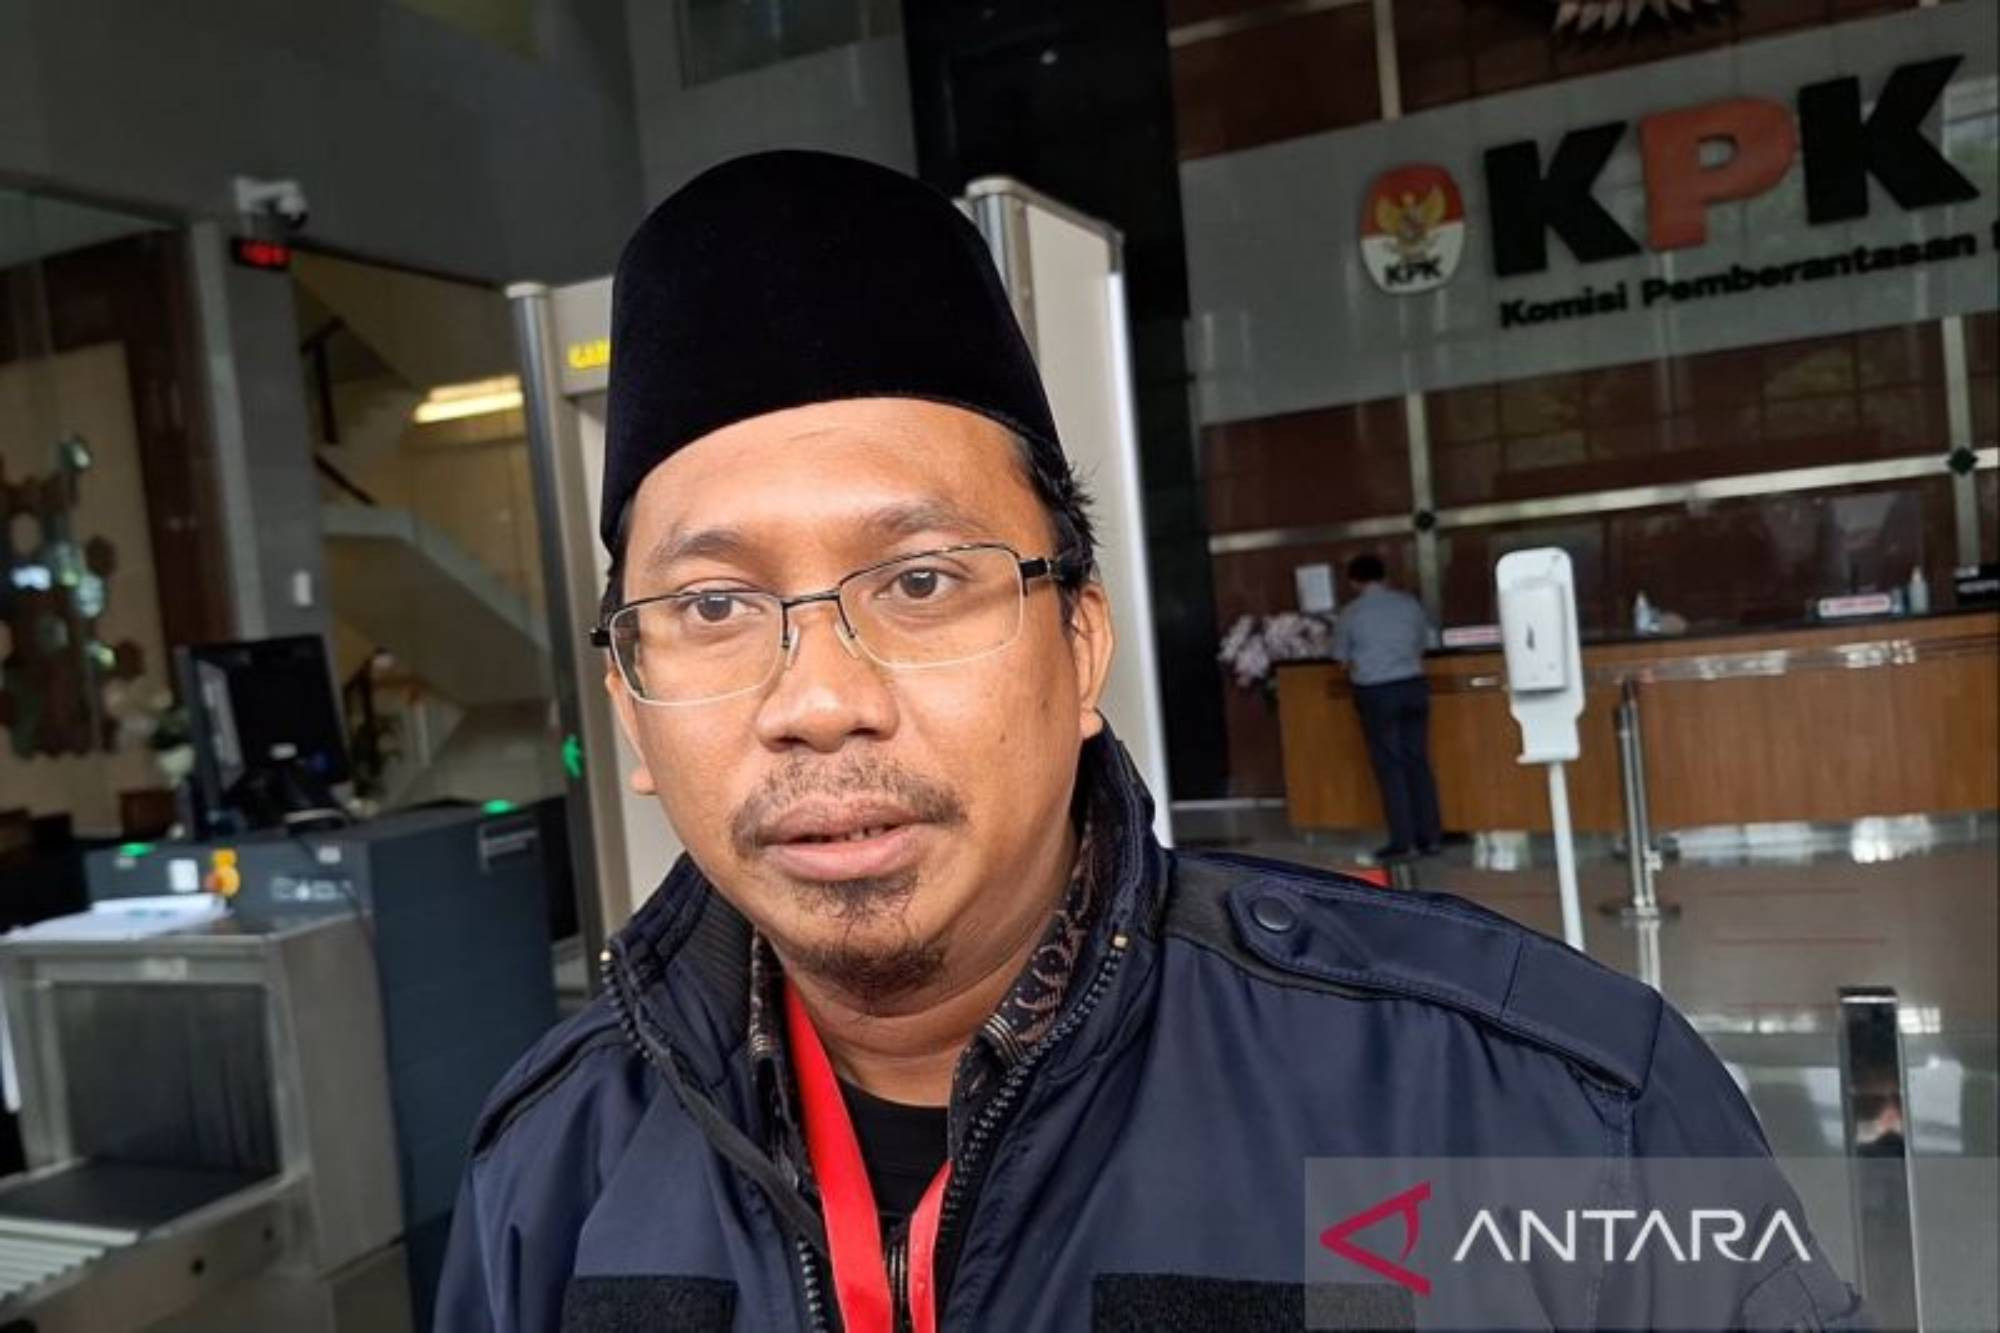 KPK: Bupati Sidoarjo Ahmad Muhdlor Tersangka Korupsi - JPNN.com